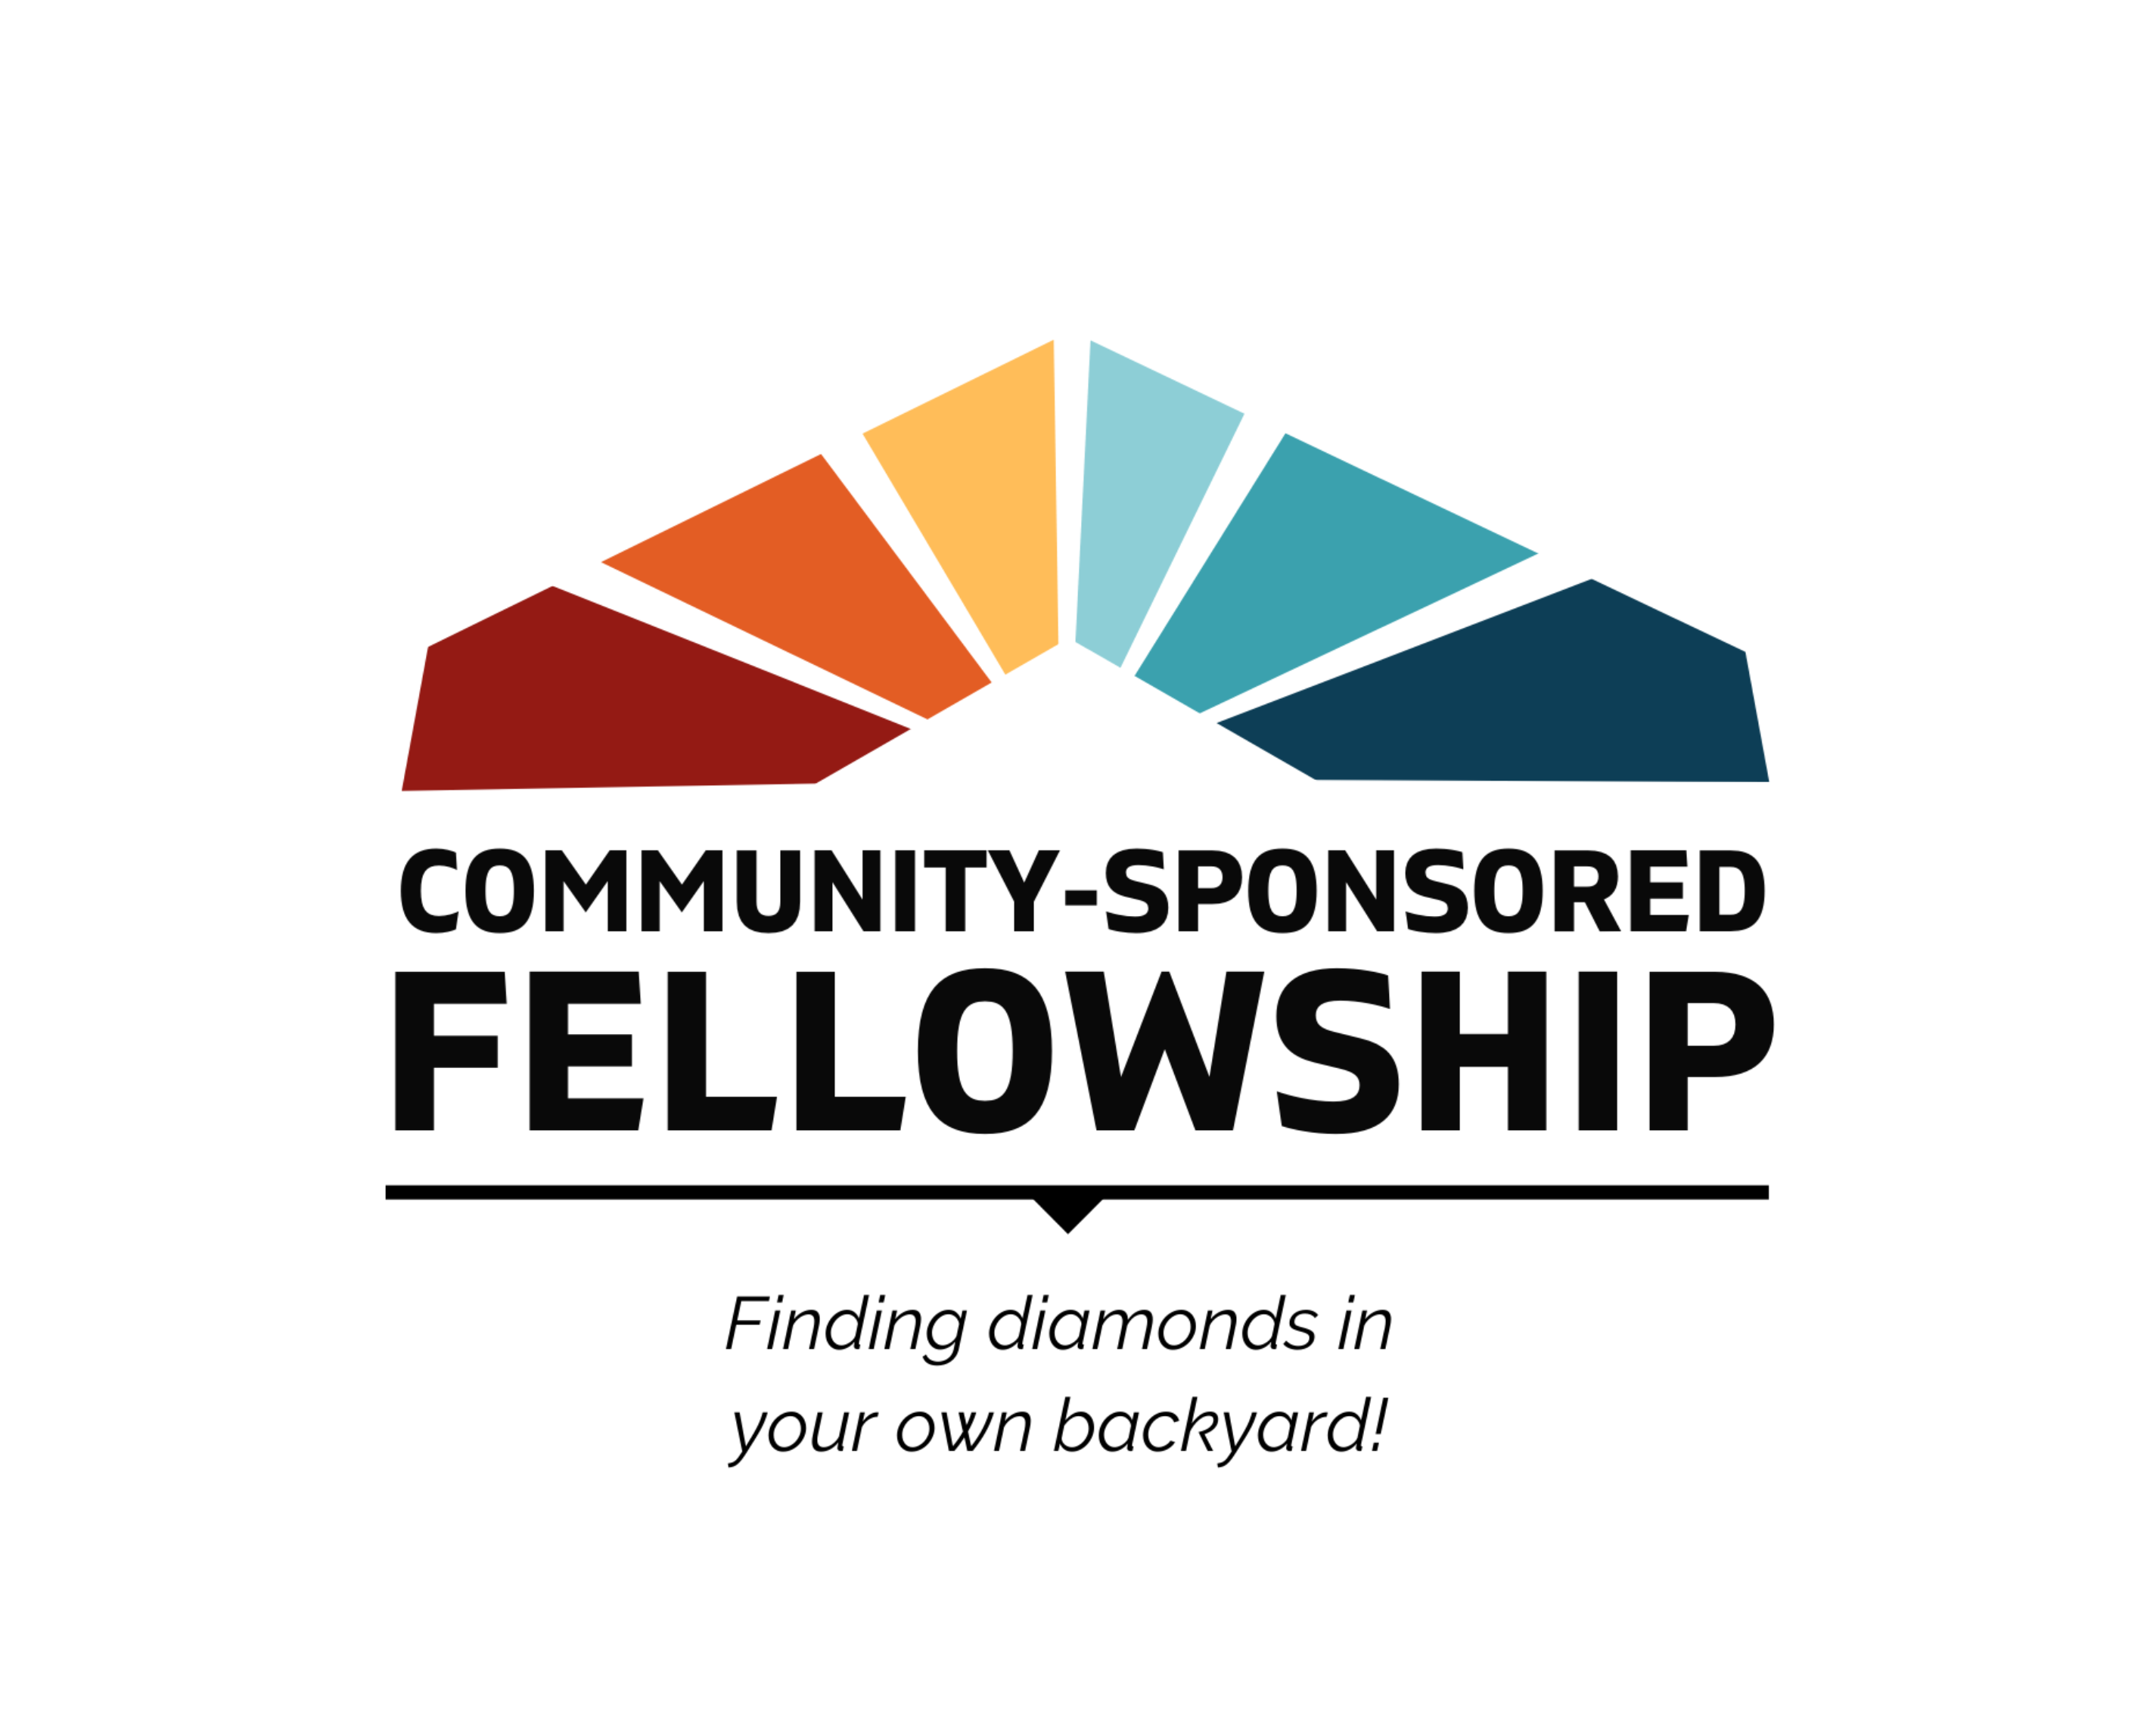 New Community Fellowship